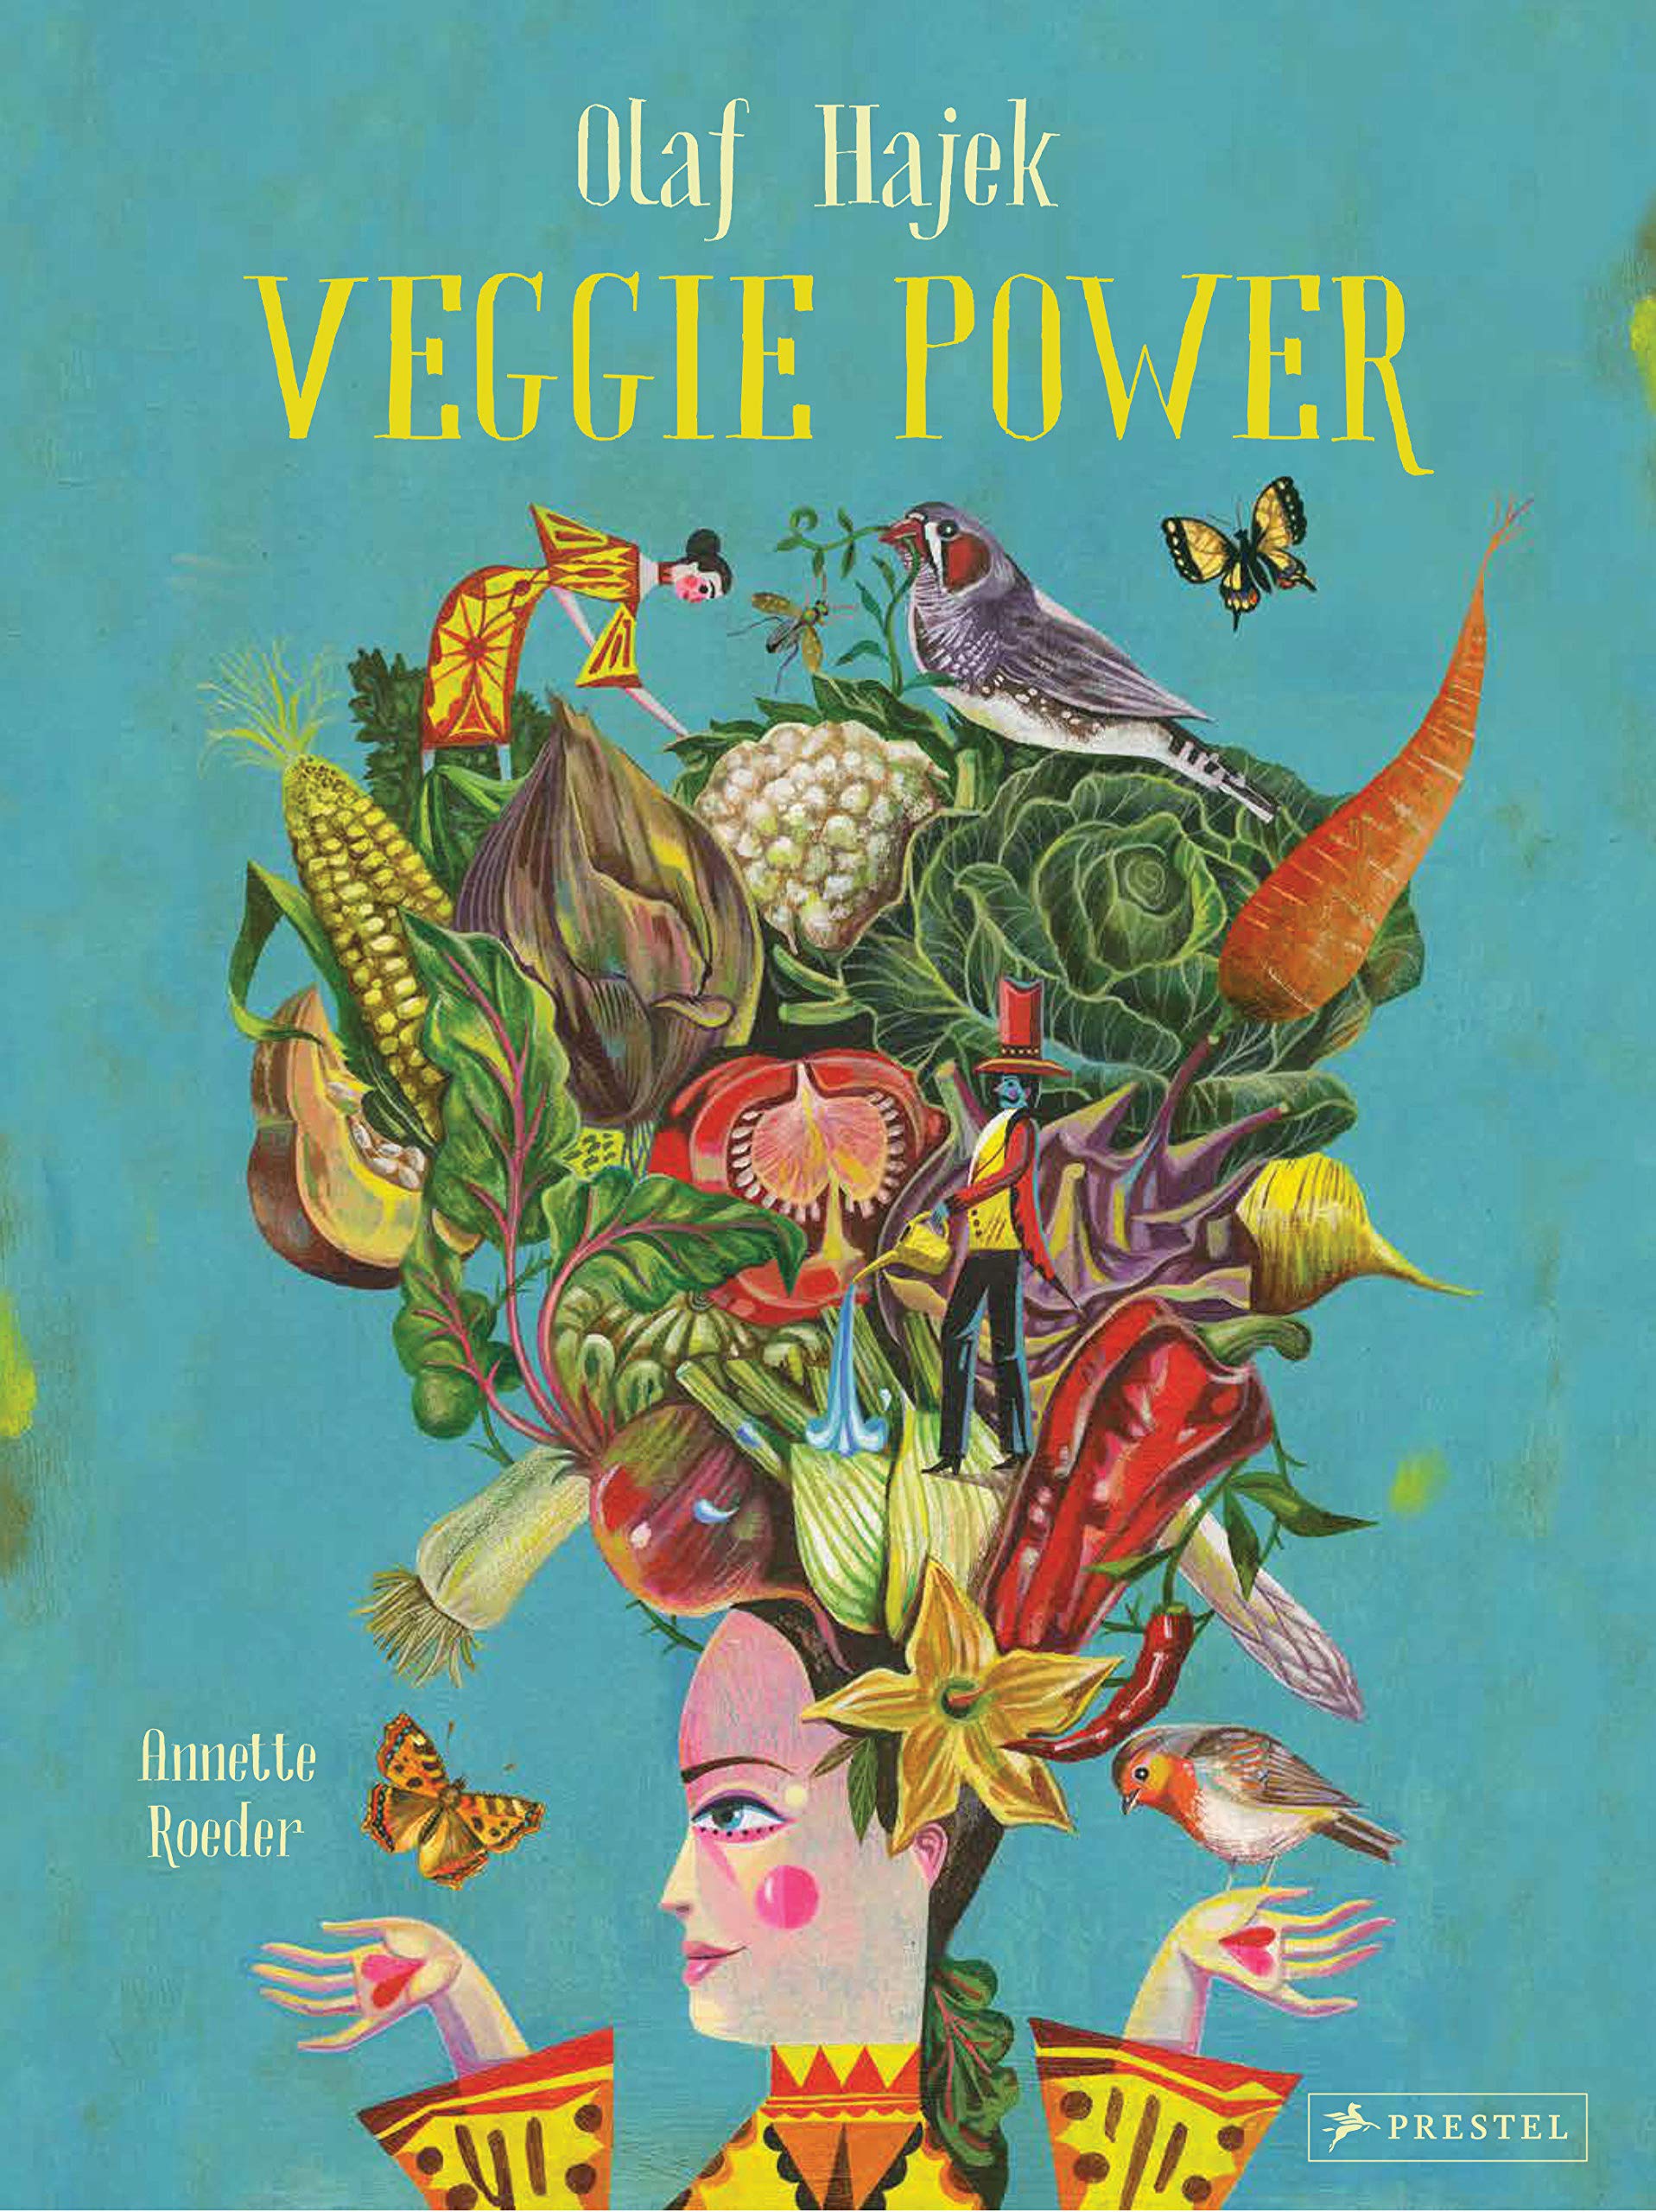 Veggie Power (Olaf Hajek, Annette Roeder)